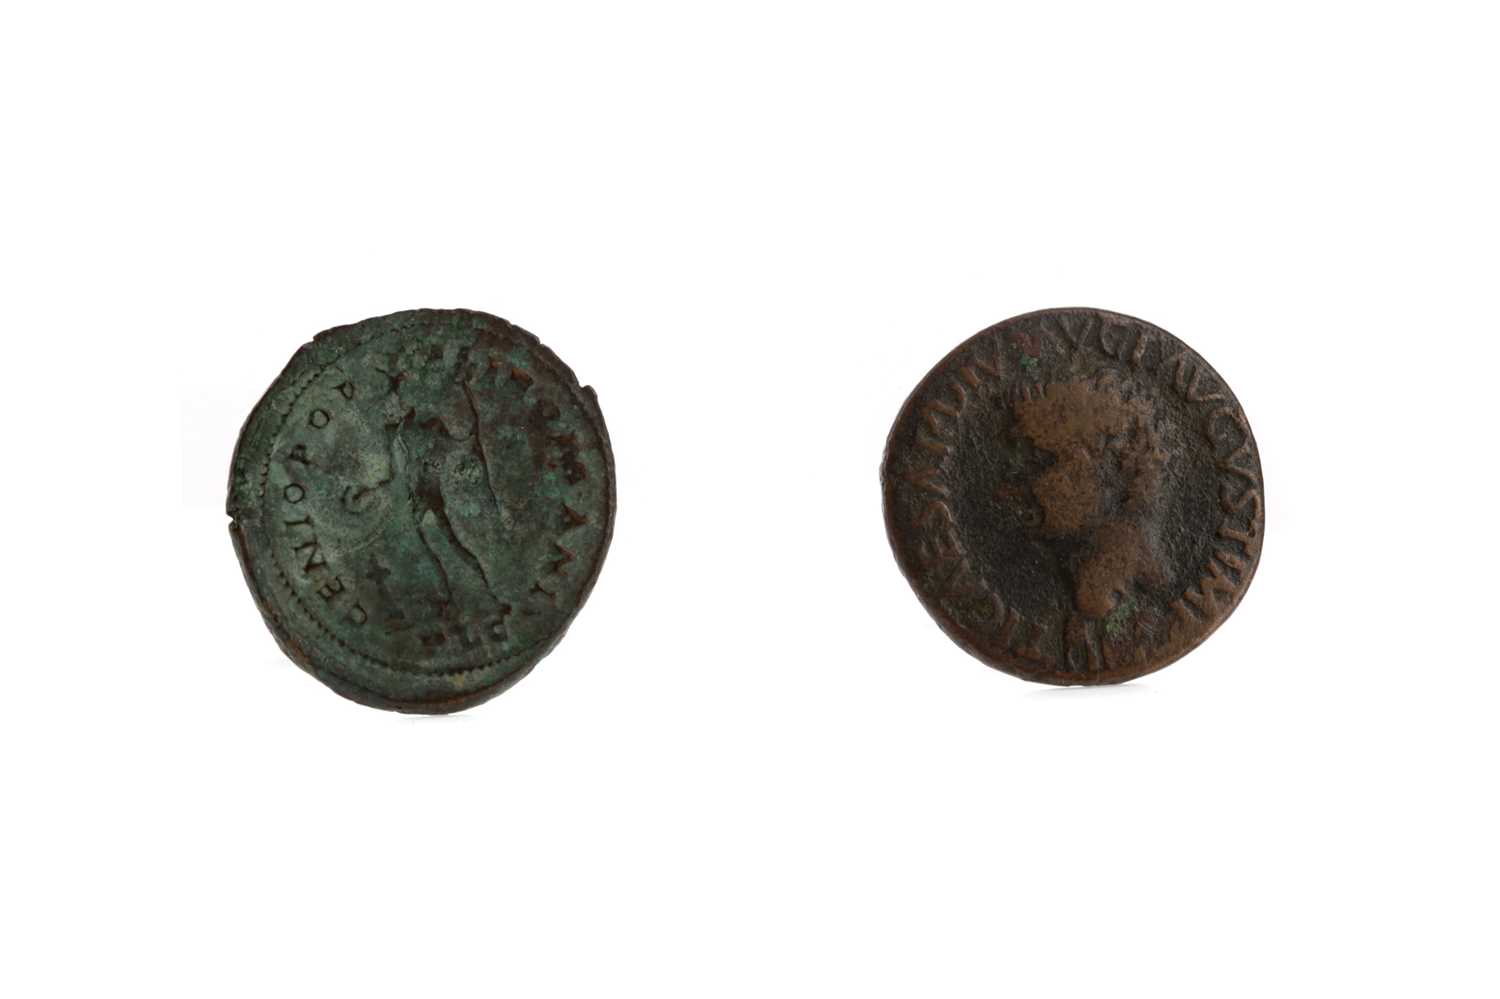 Lot 59 - A CONSTANTINE 1 (AD 307 - 337) BRONZE FOLLIS, ALONG WITH A CEASAR AUGUSTUS BRONZE COIN